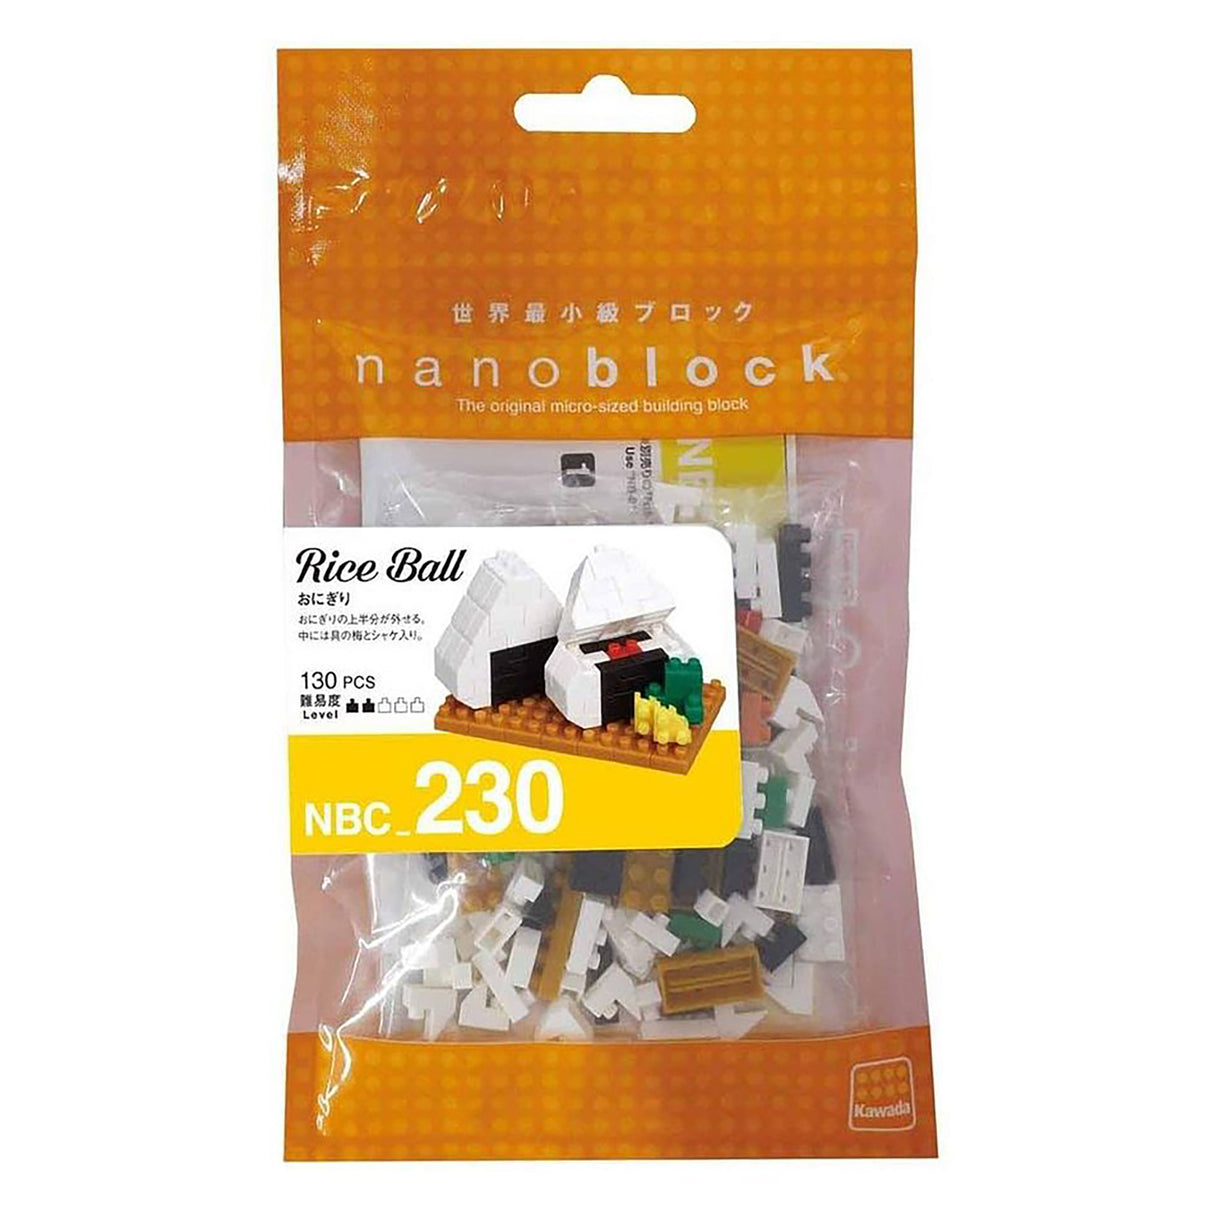 nanoblock Rice Ball Onigiri (130 pieces)